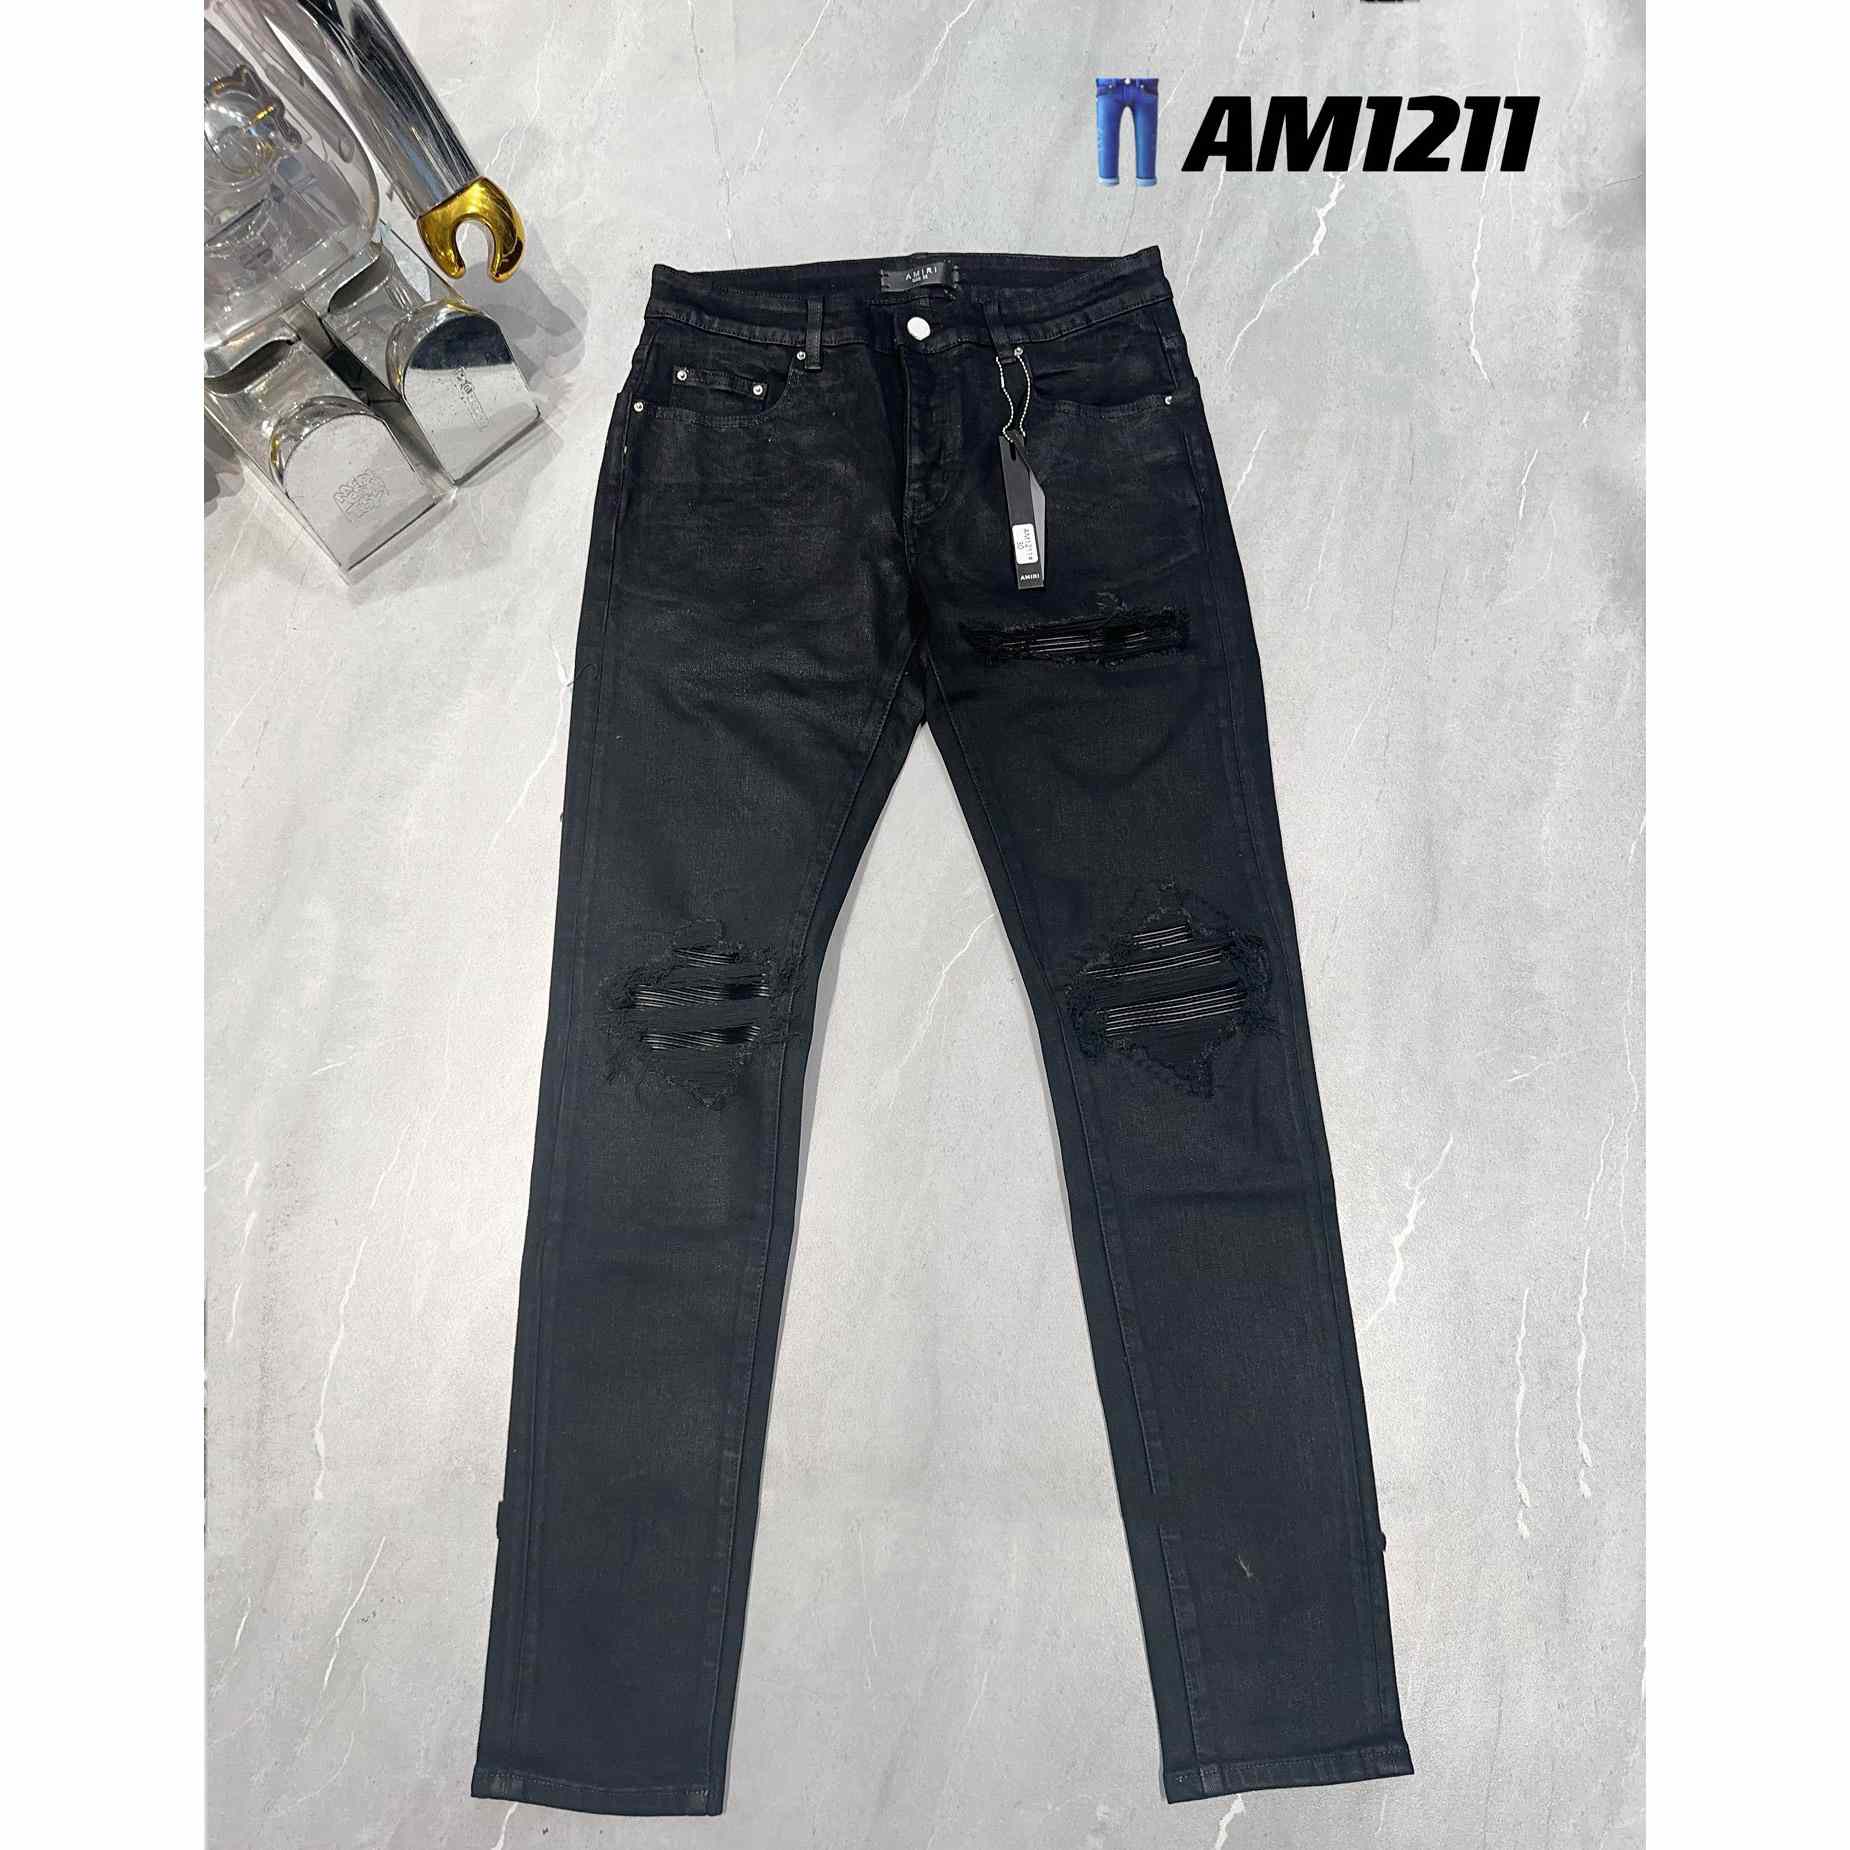 Amiri Jeans     AM1211 - everydesigner